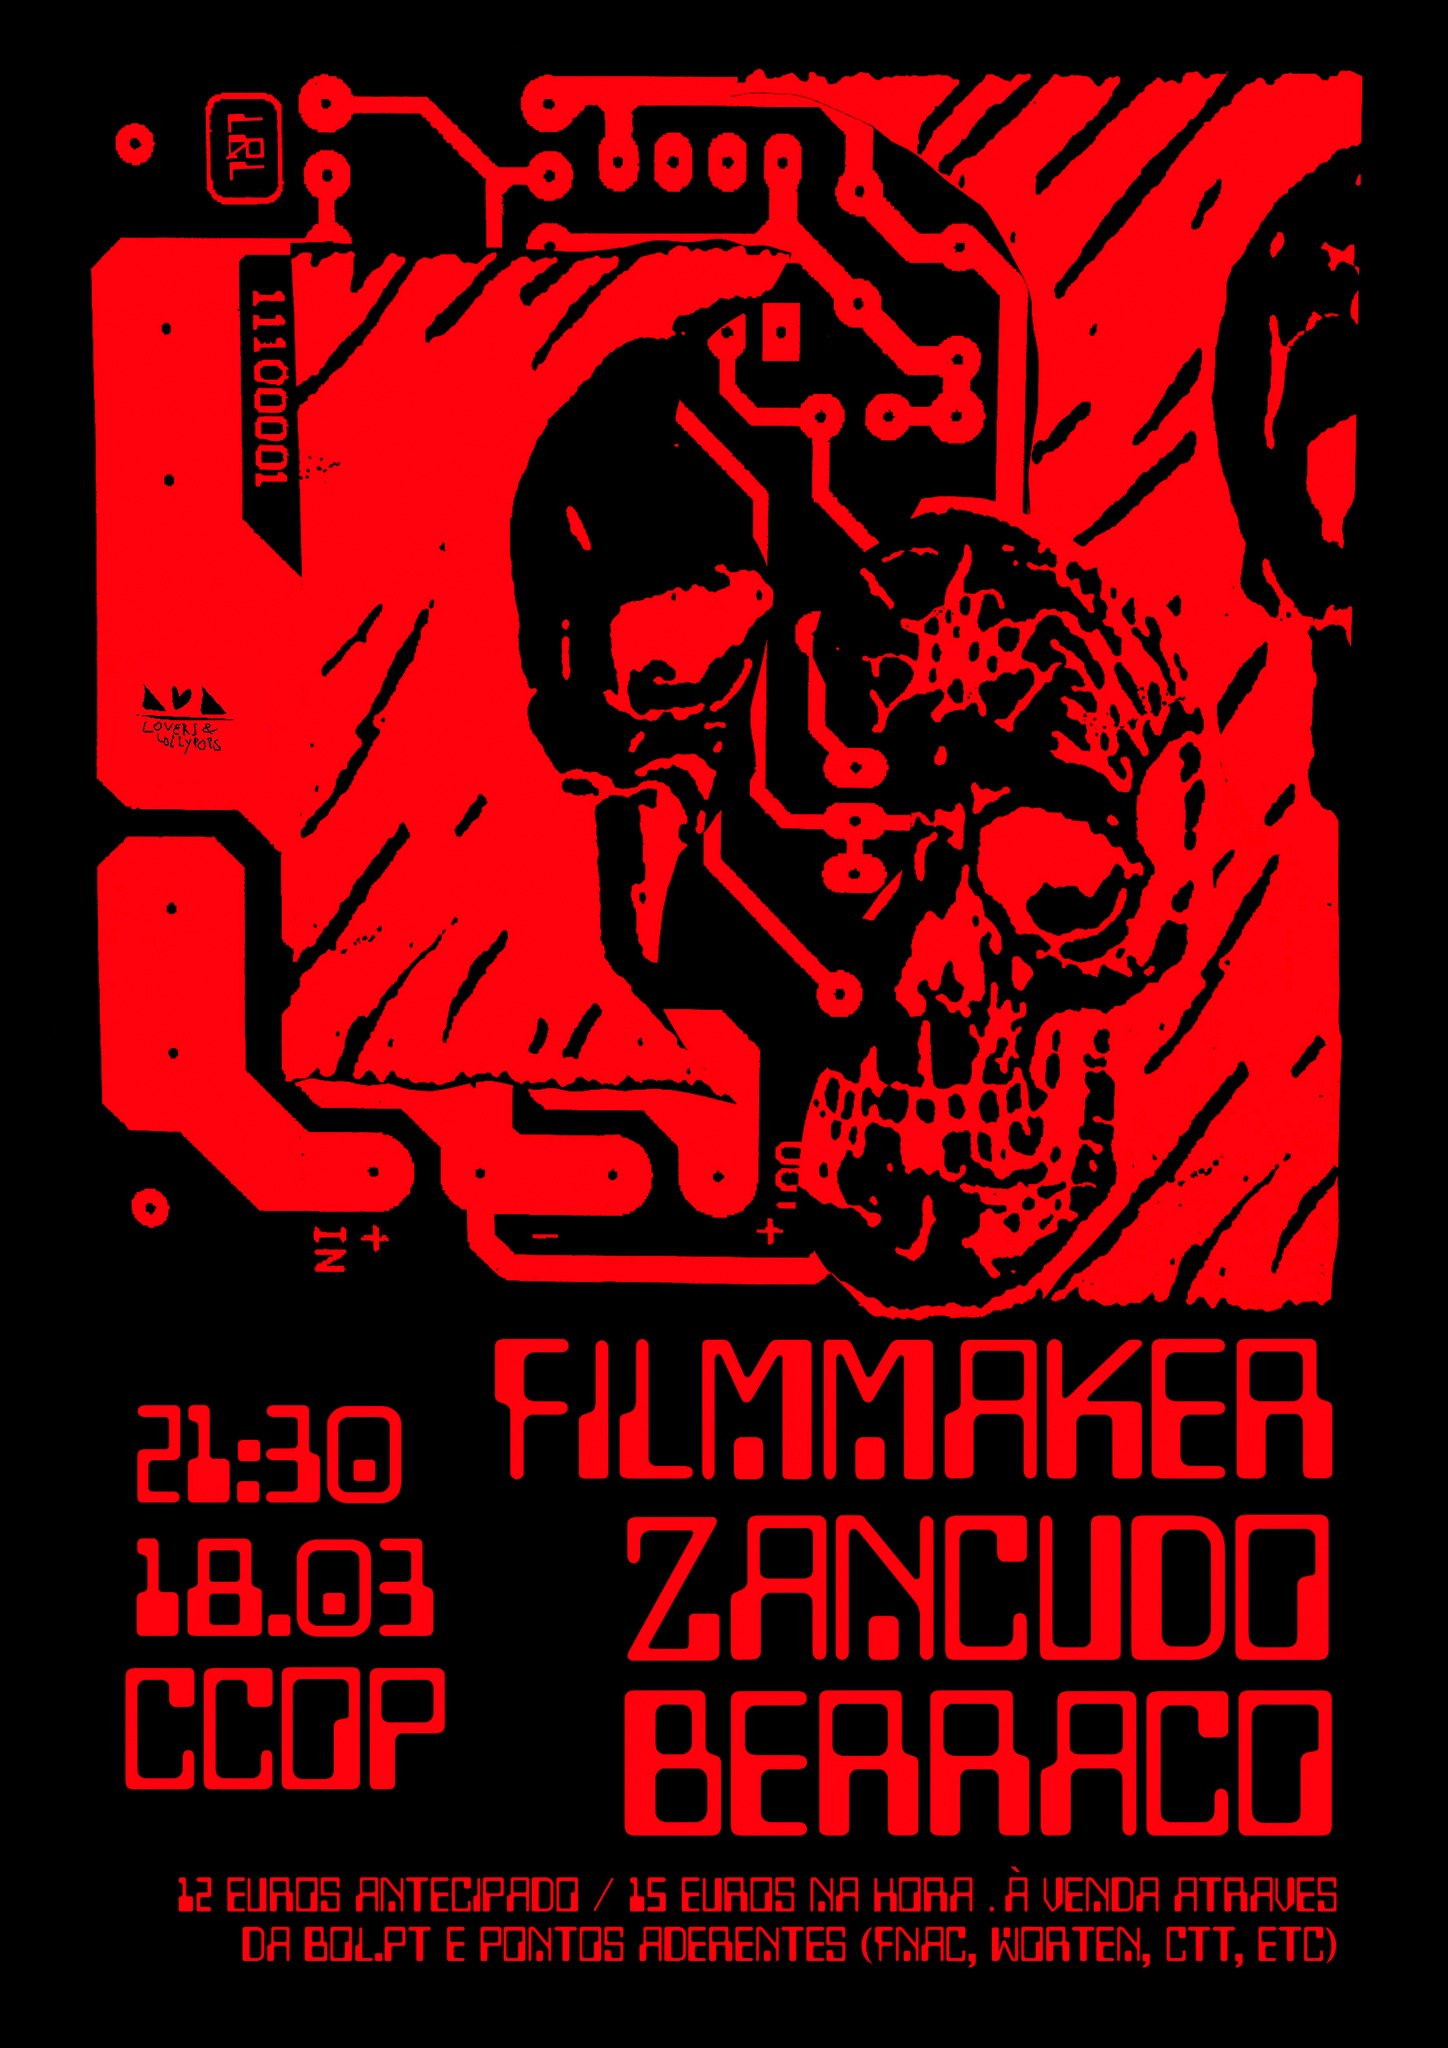 Filmmaker + Zancudo Berraco